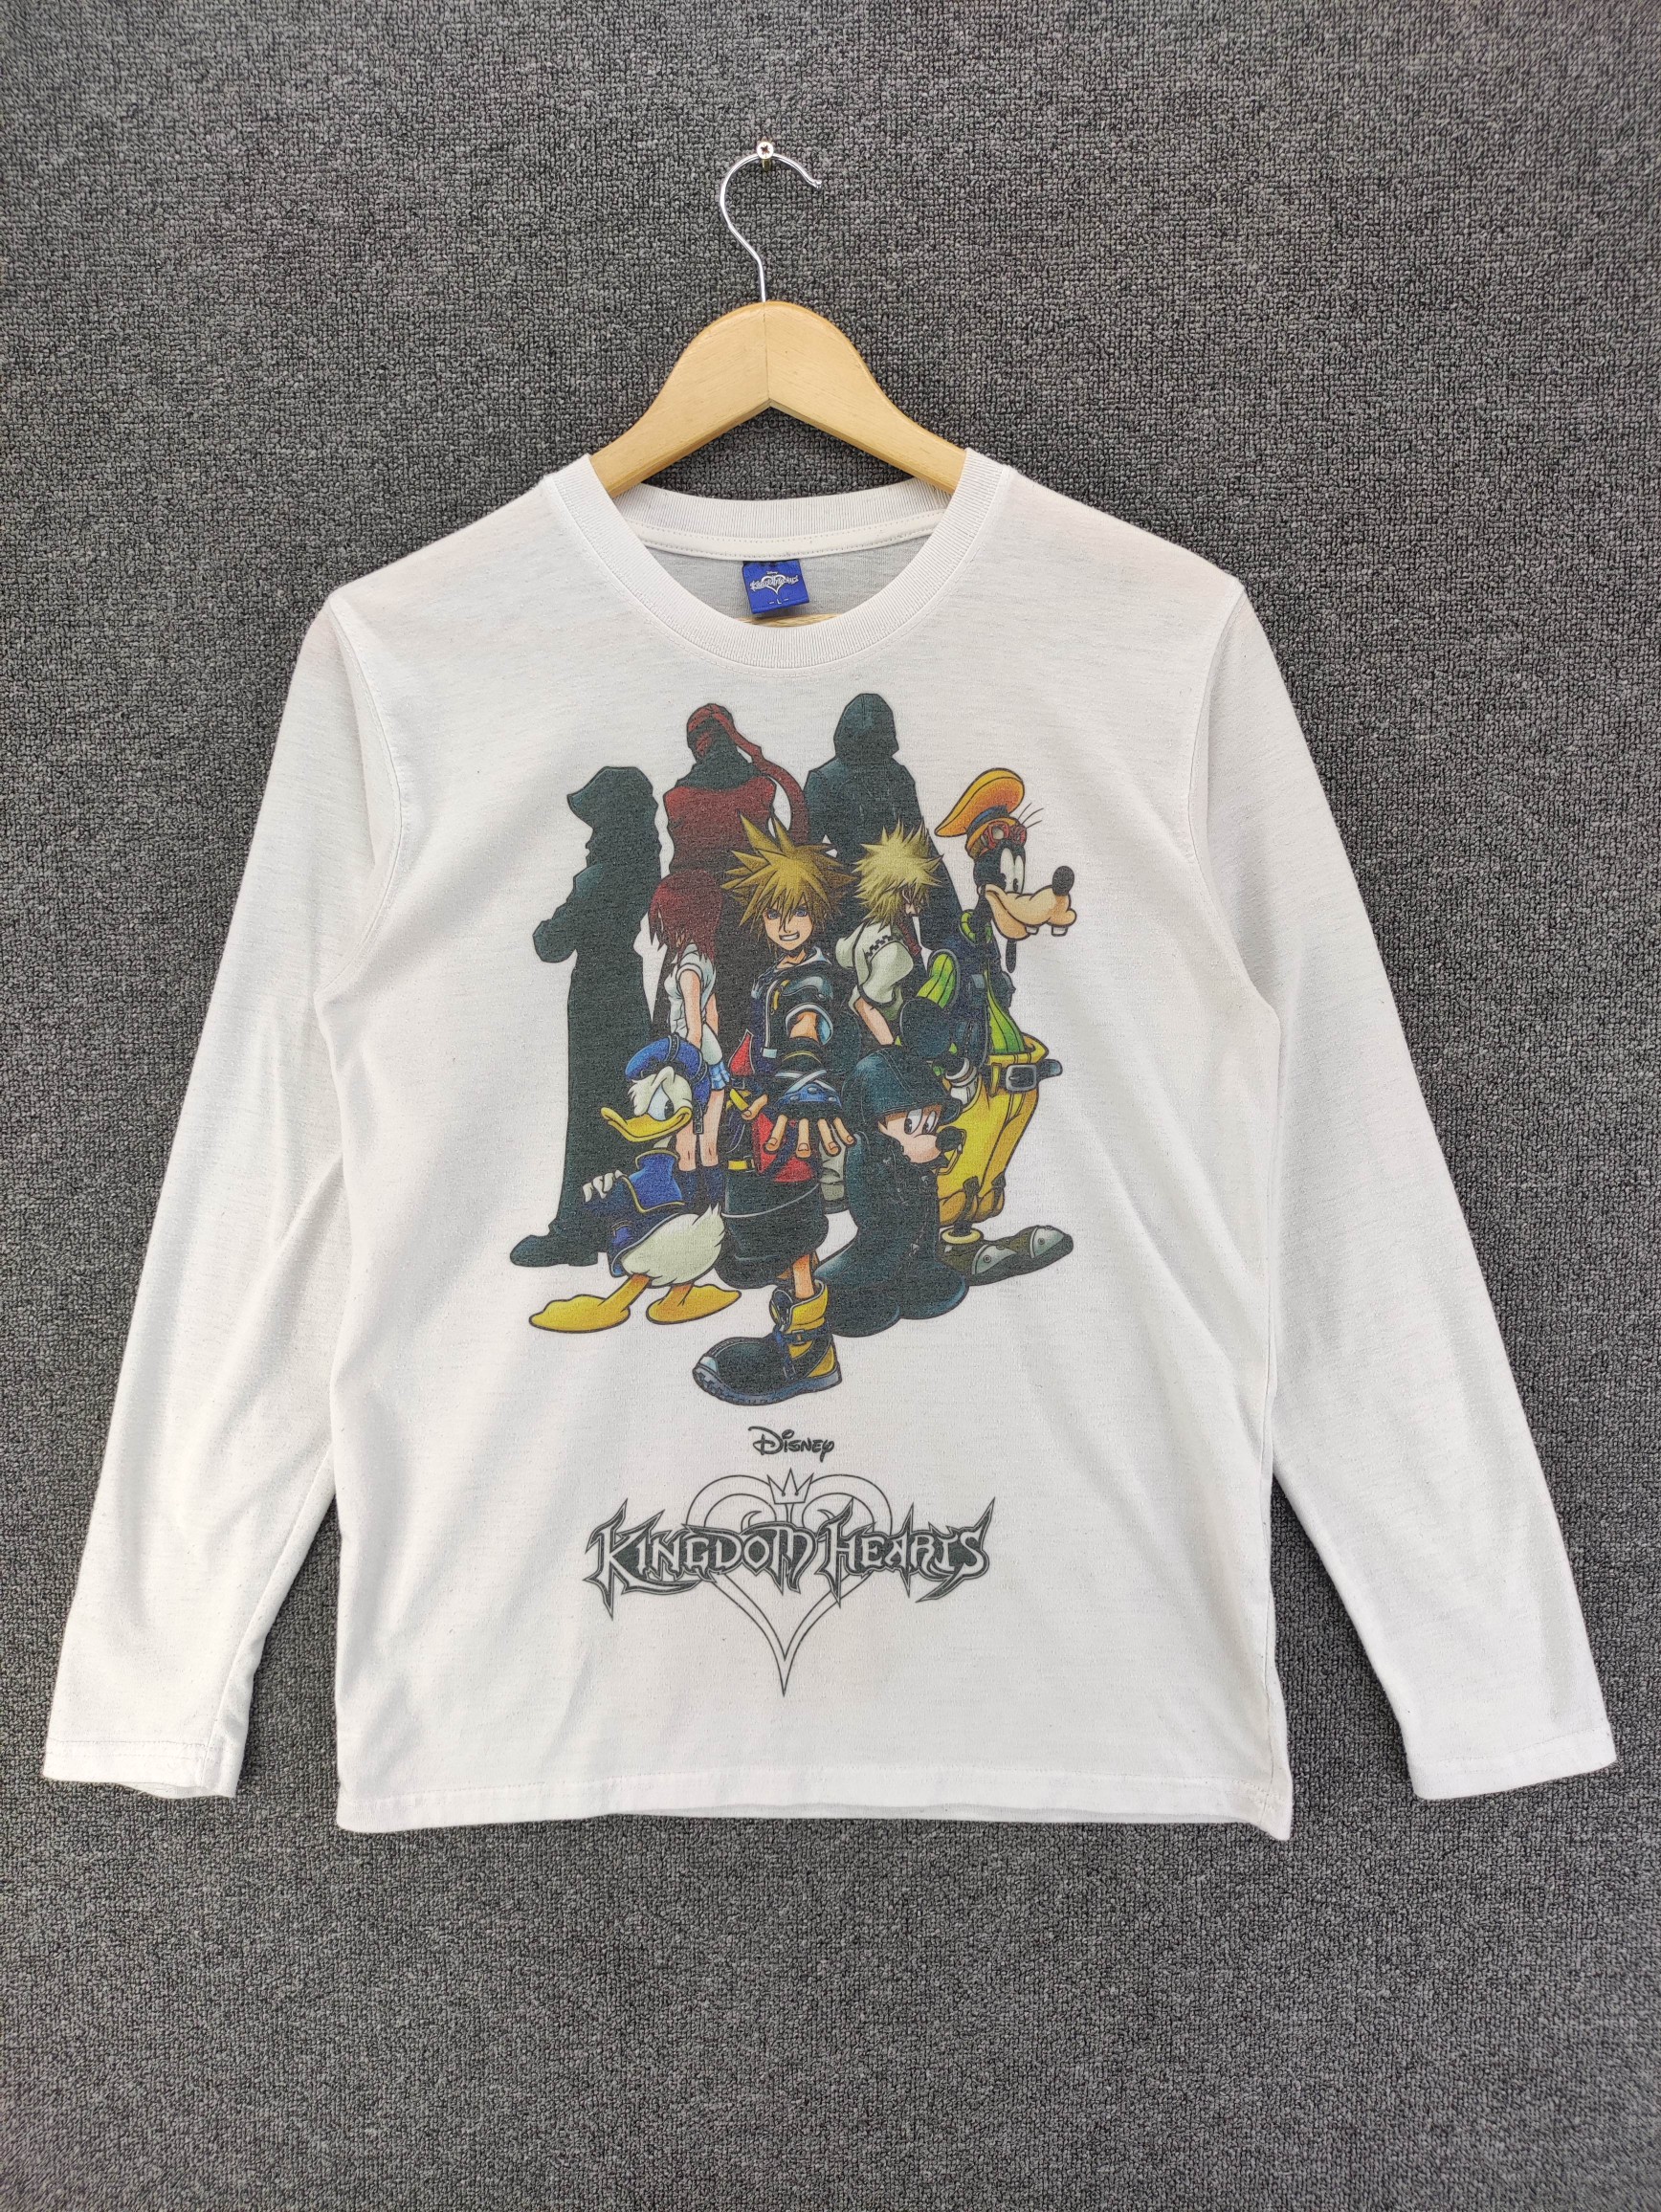 kingdom Hearts Long Sleeve Shirt - 1